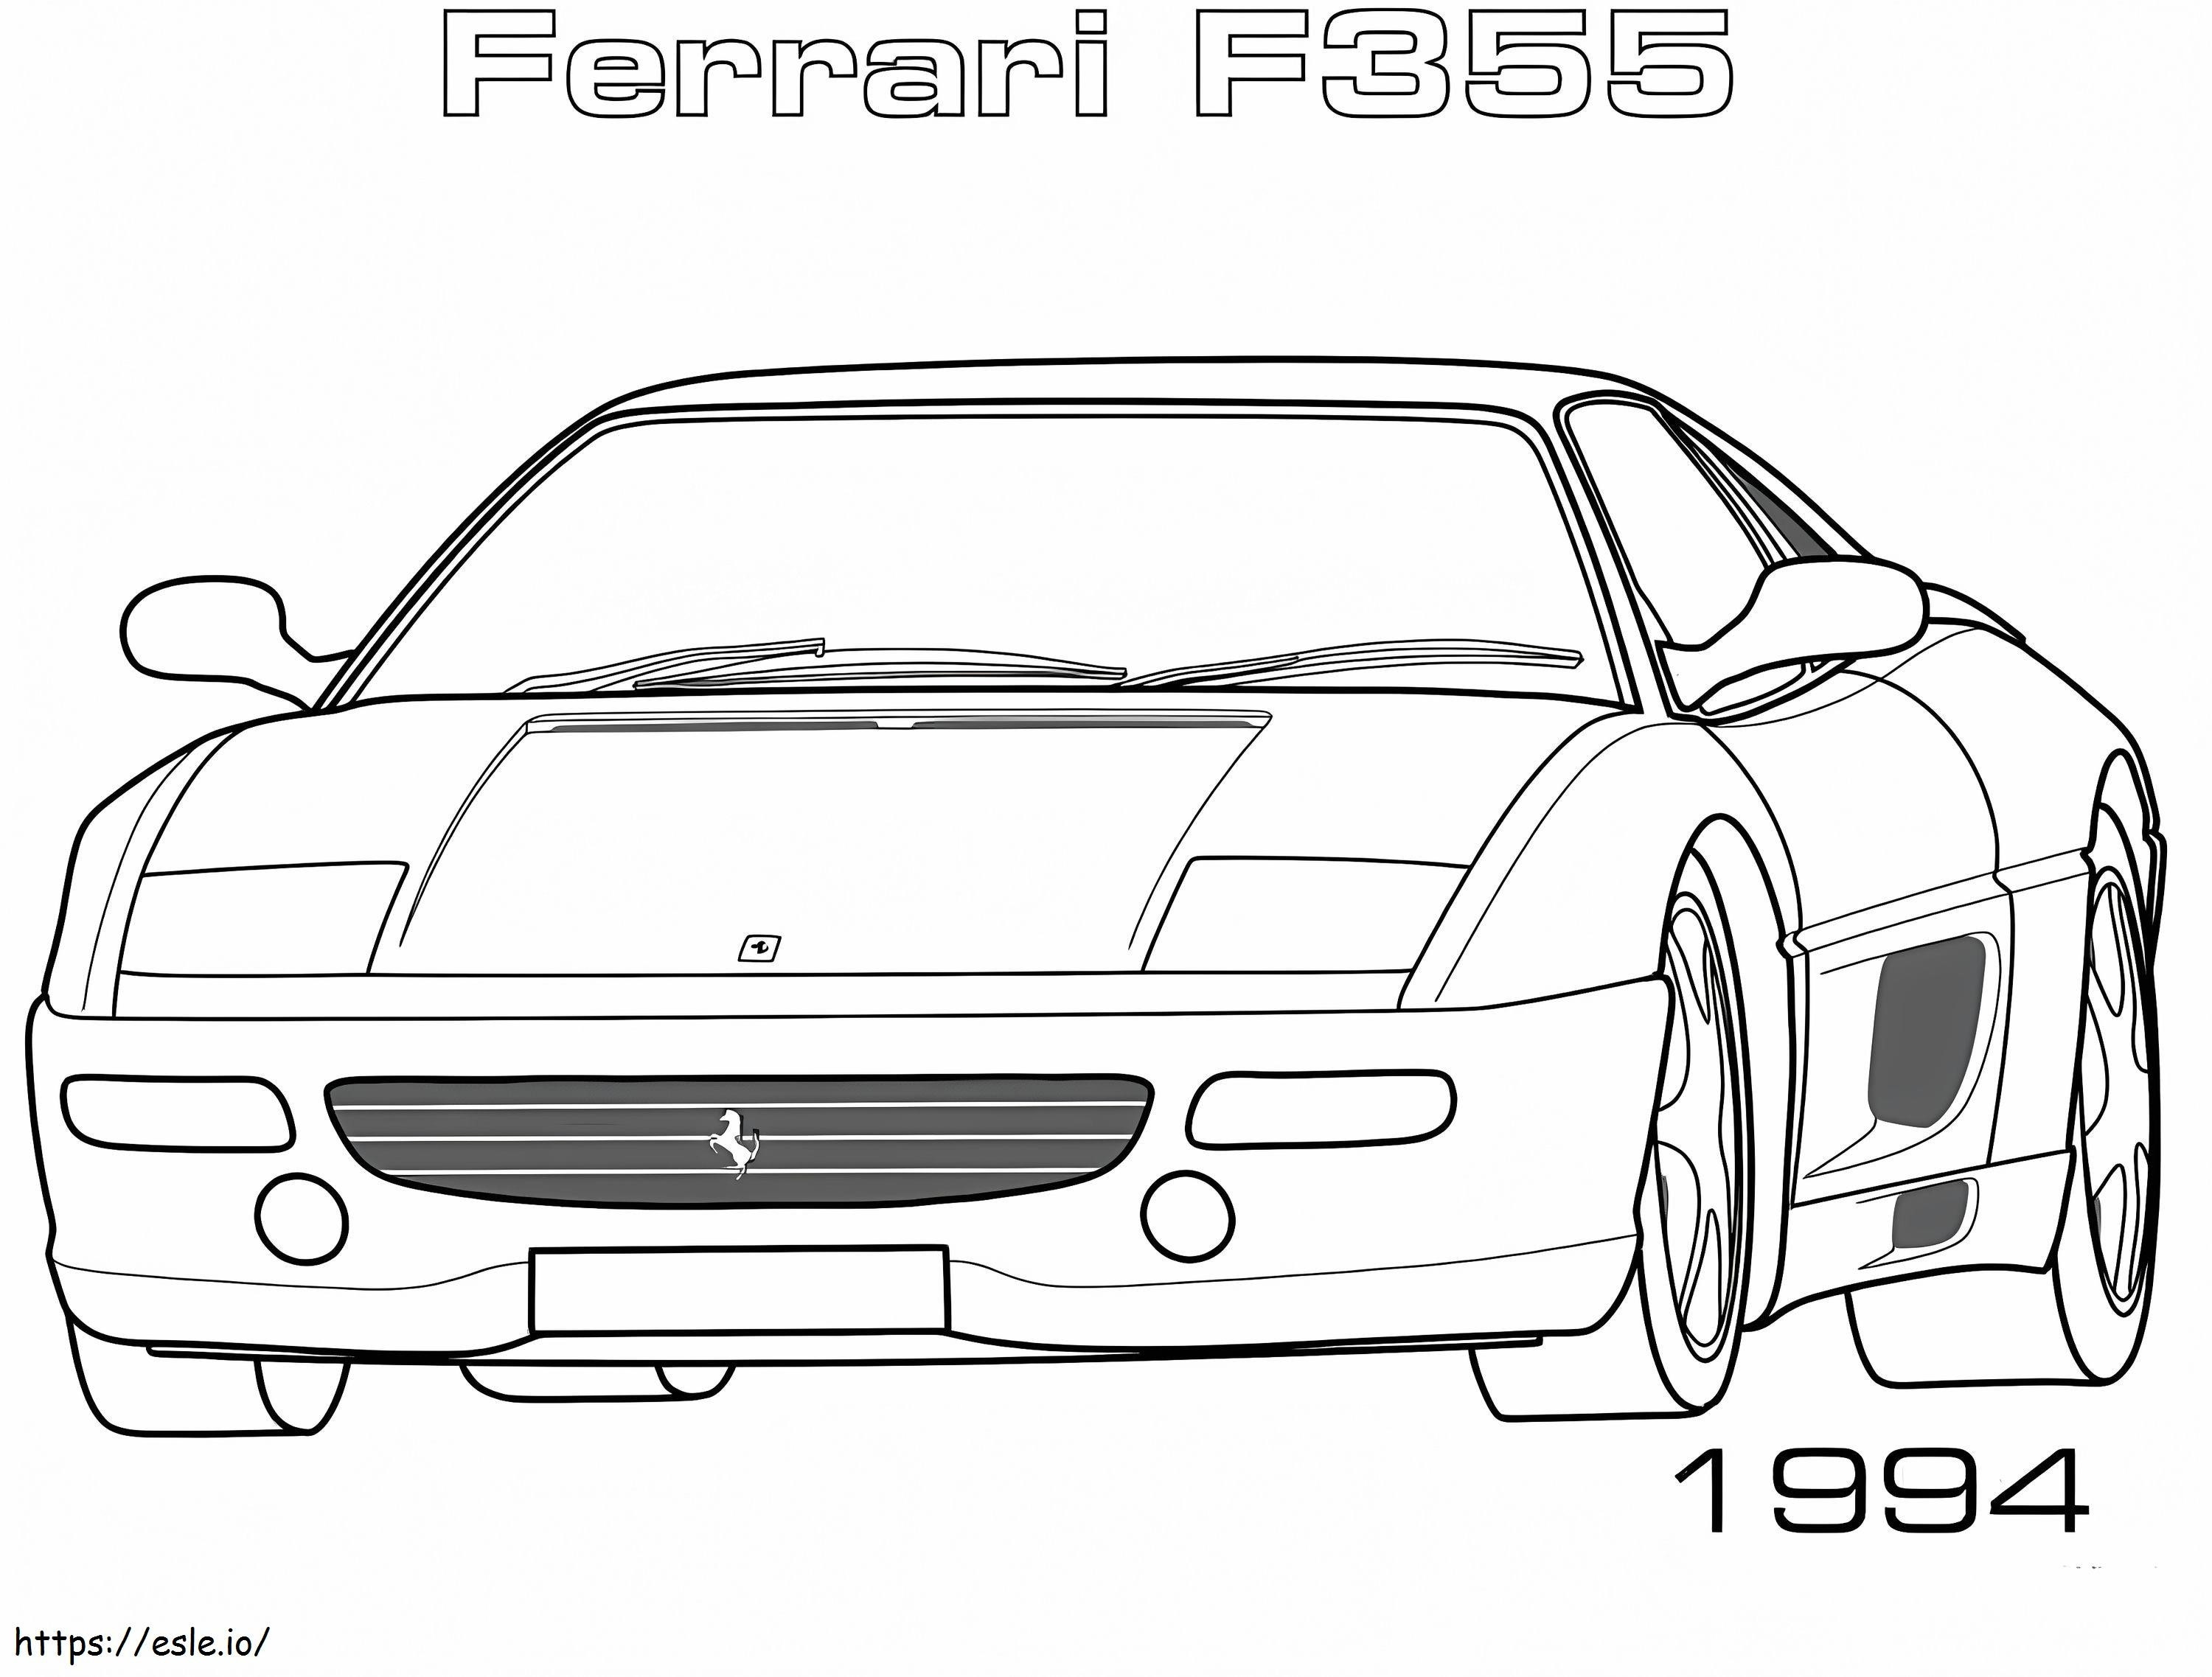 Coloriage Ferrari F355 1994 à imprimer dessin